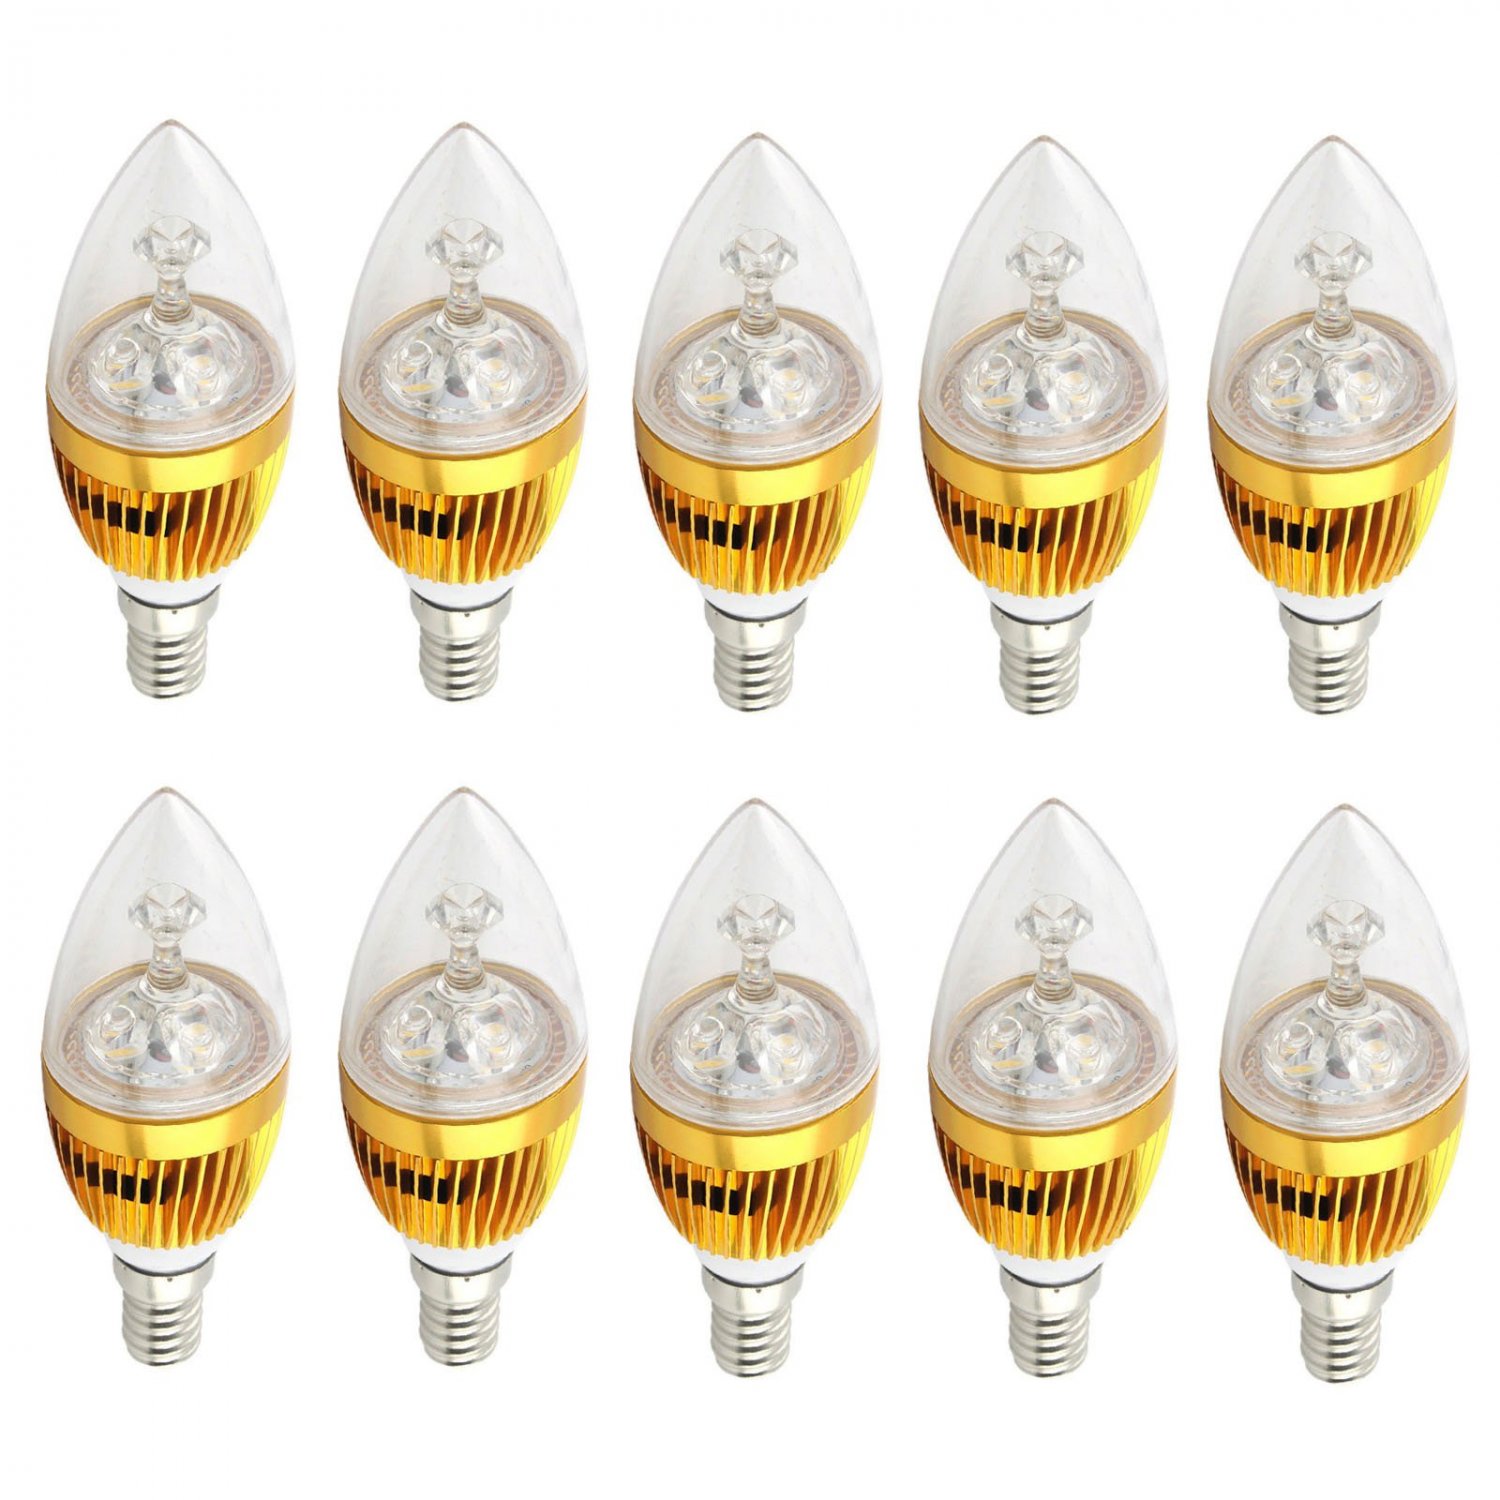 10x E12 LED Candelabra Bulb 110V Dimmable 3W 6W 9W High Power  Chandelier Light 